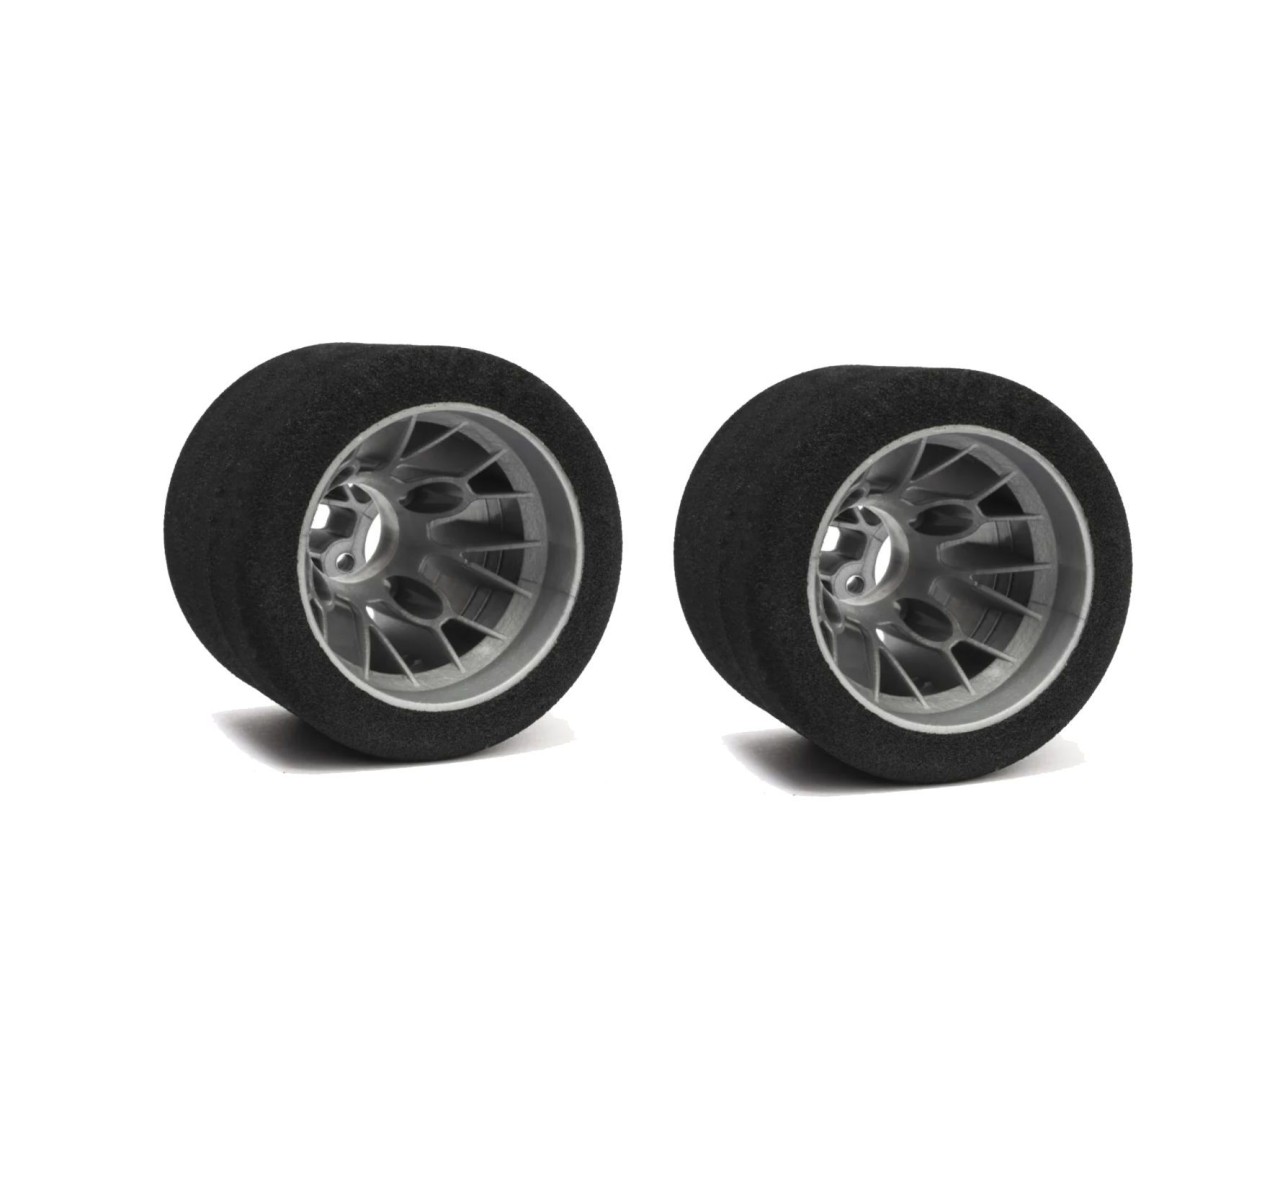 Hot Race Tires - 1:10 PanCar Moosgummi Reifen - hinten - 37 Shore (2 Stück)